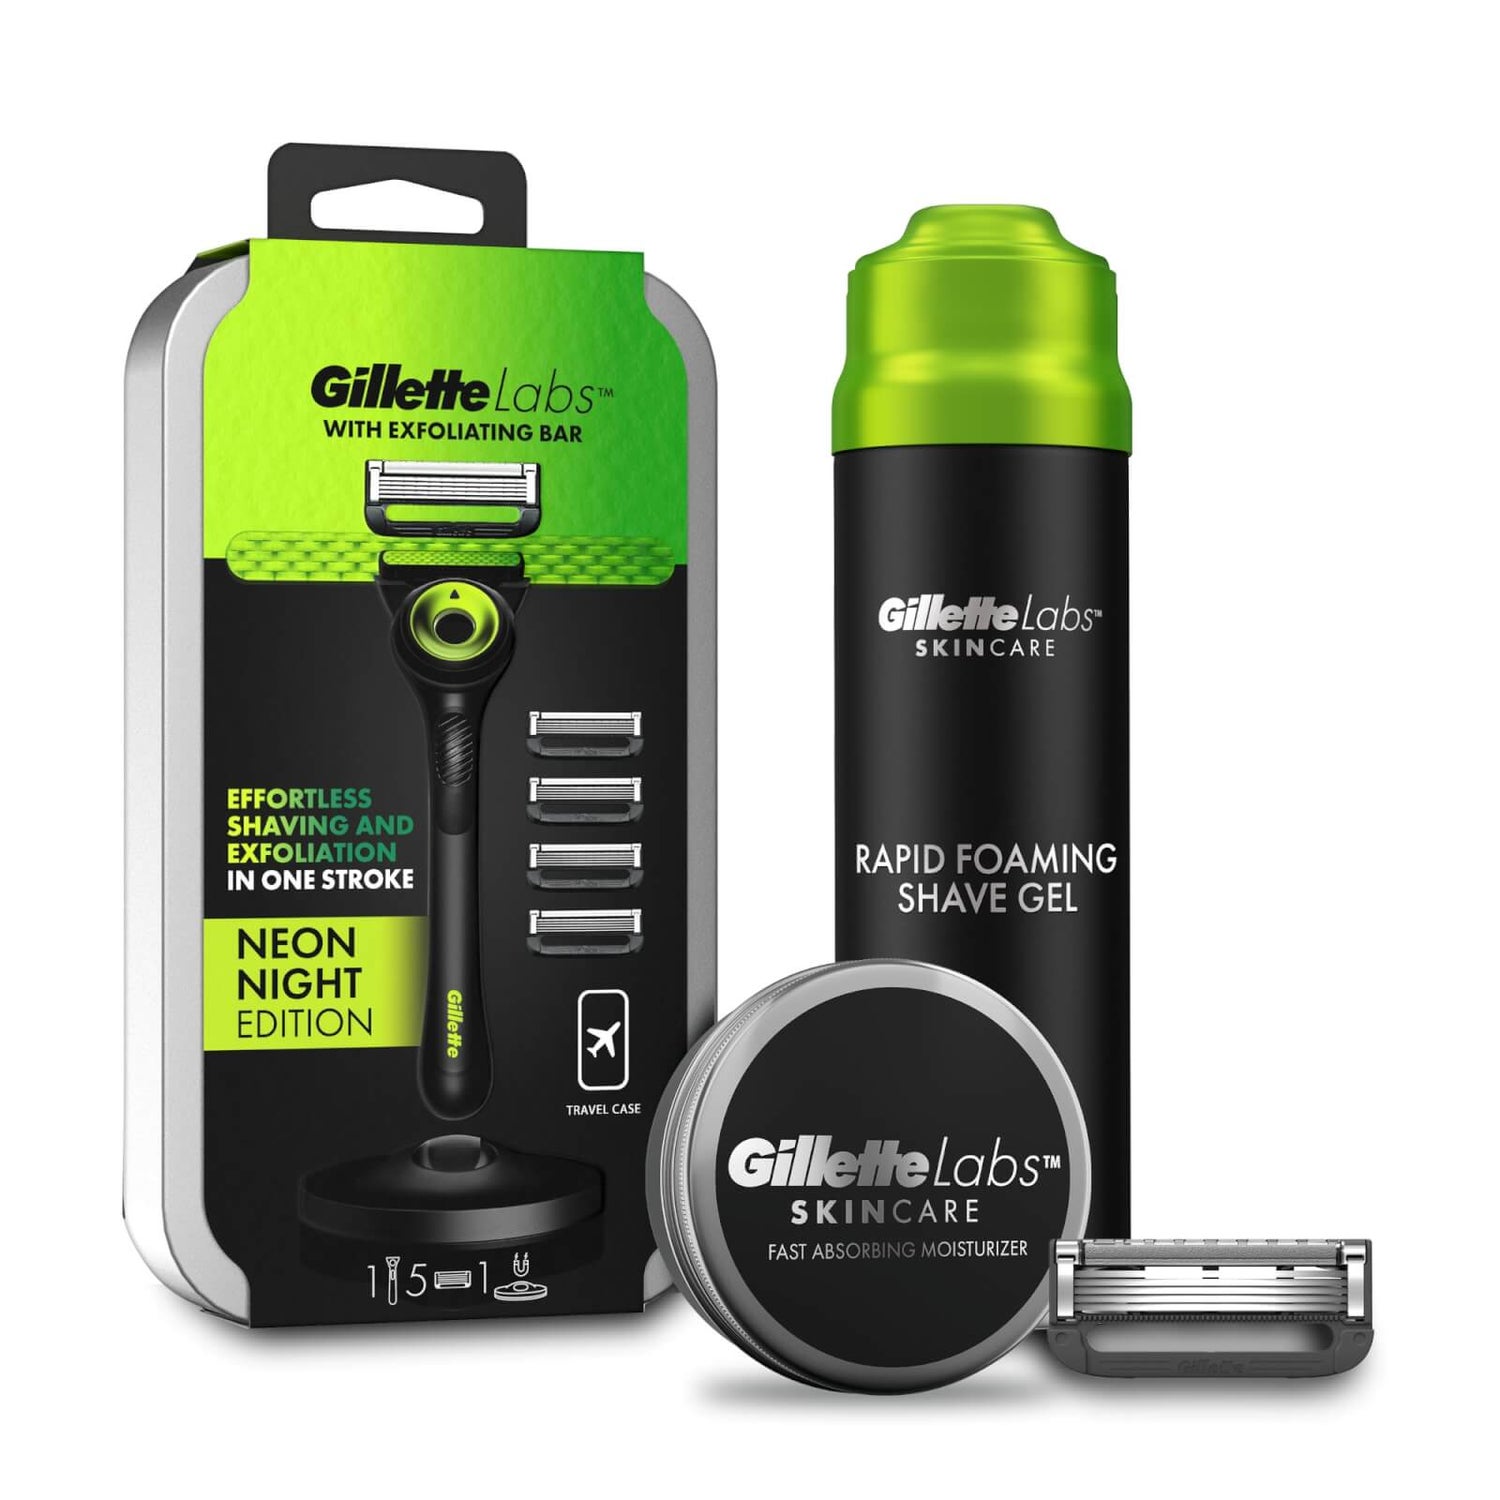 Gillette Labs Neon Night Razor, Travel Case, 4 Blade Refills, Shaving Gel, Moisturiser